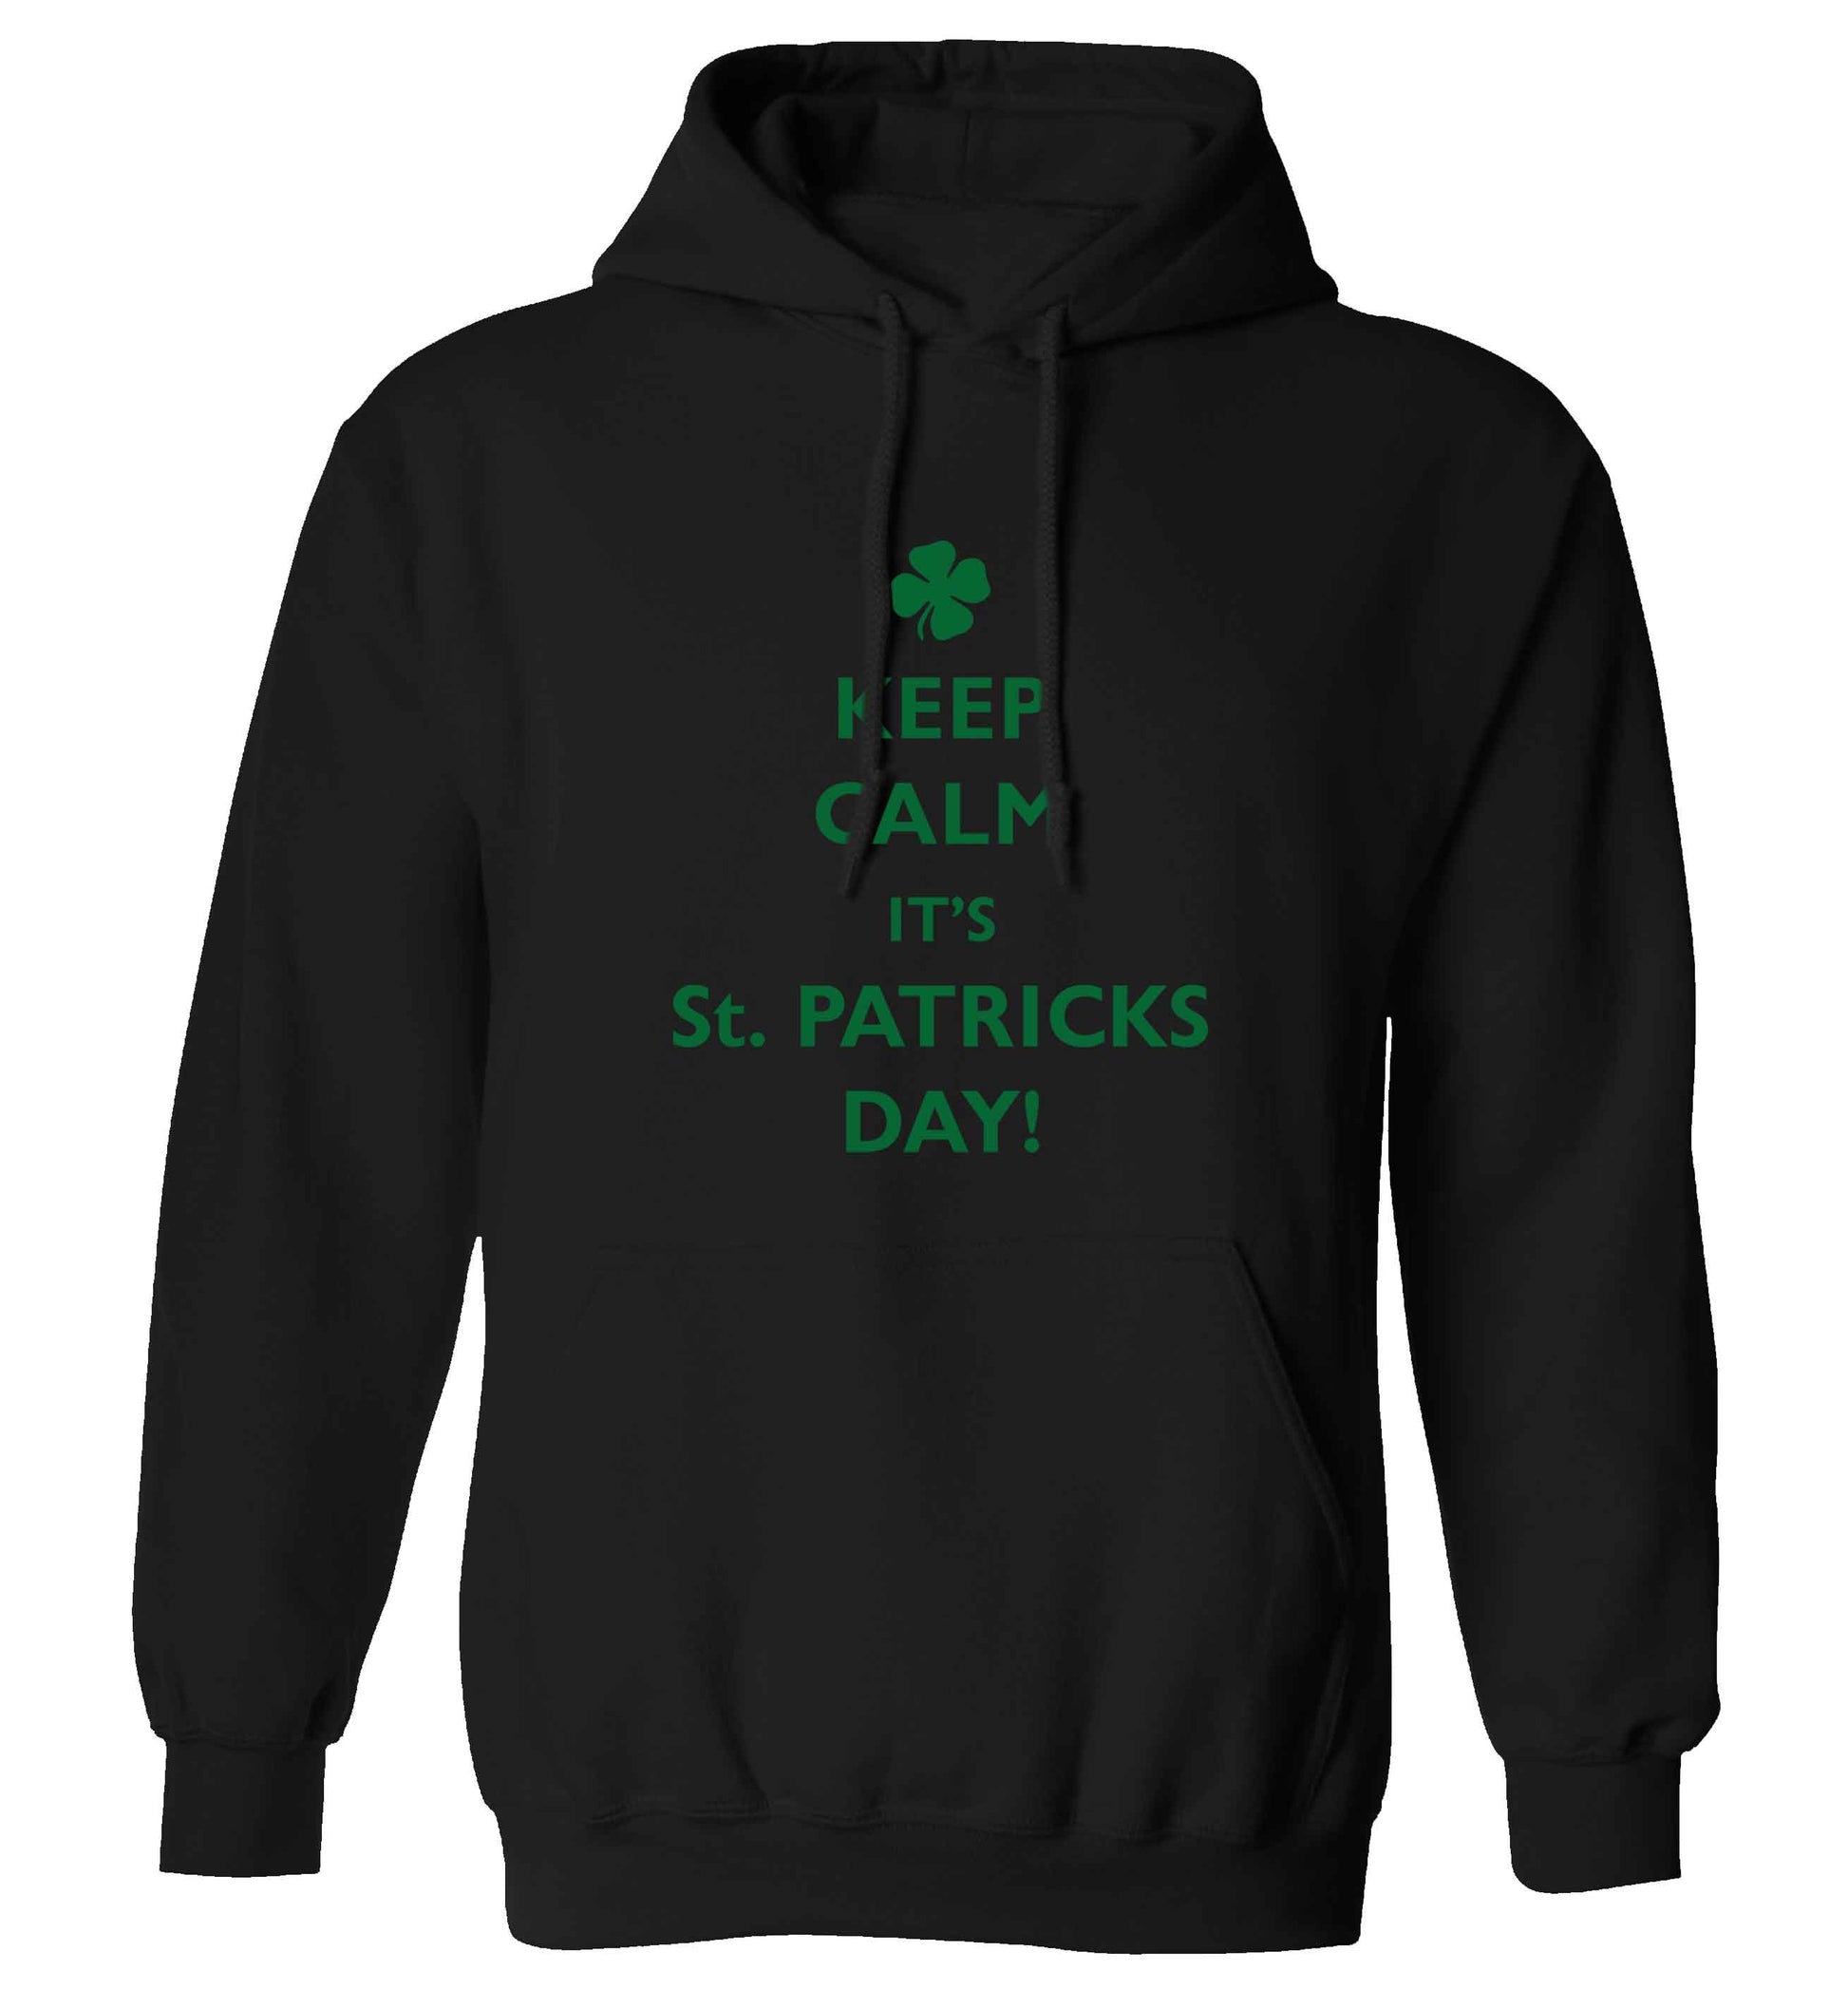 Keep calm it's St.Patricks day adults unisex black hoodie 2XL